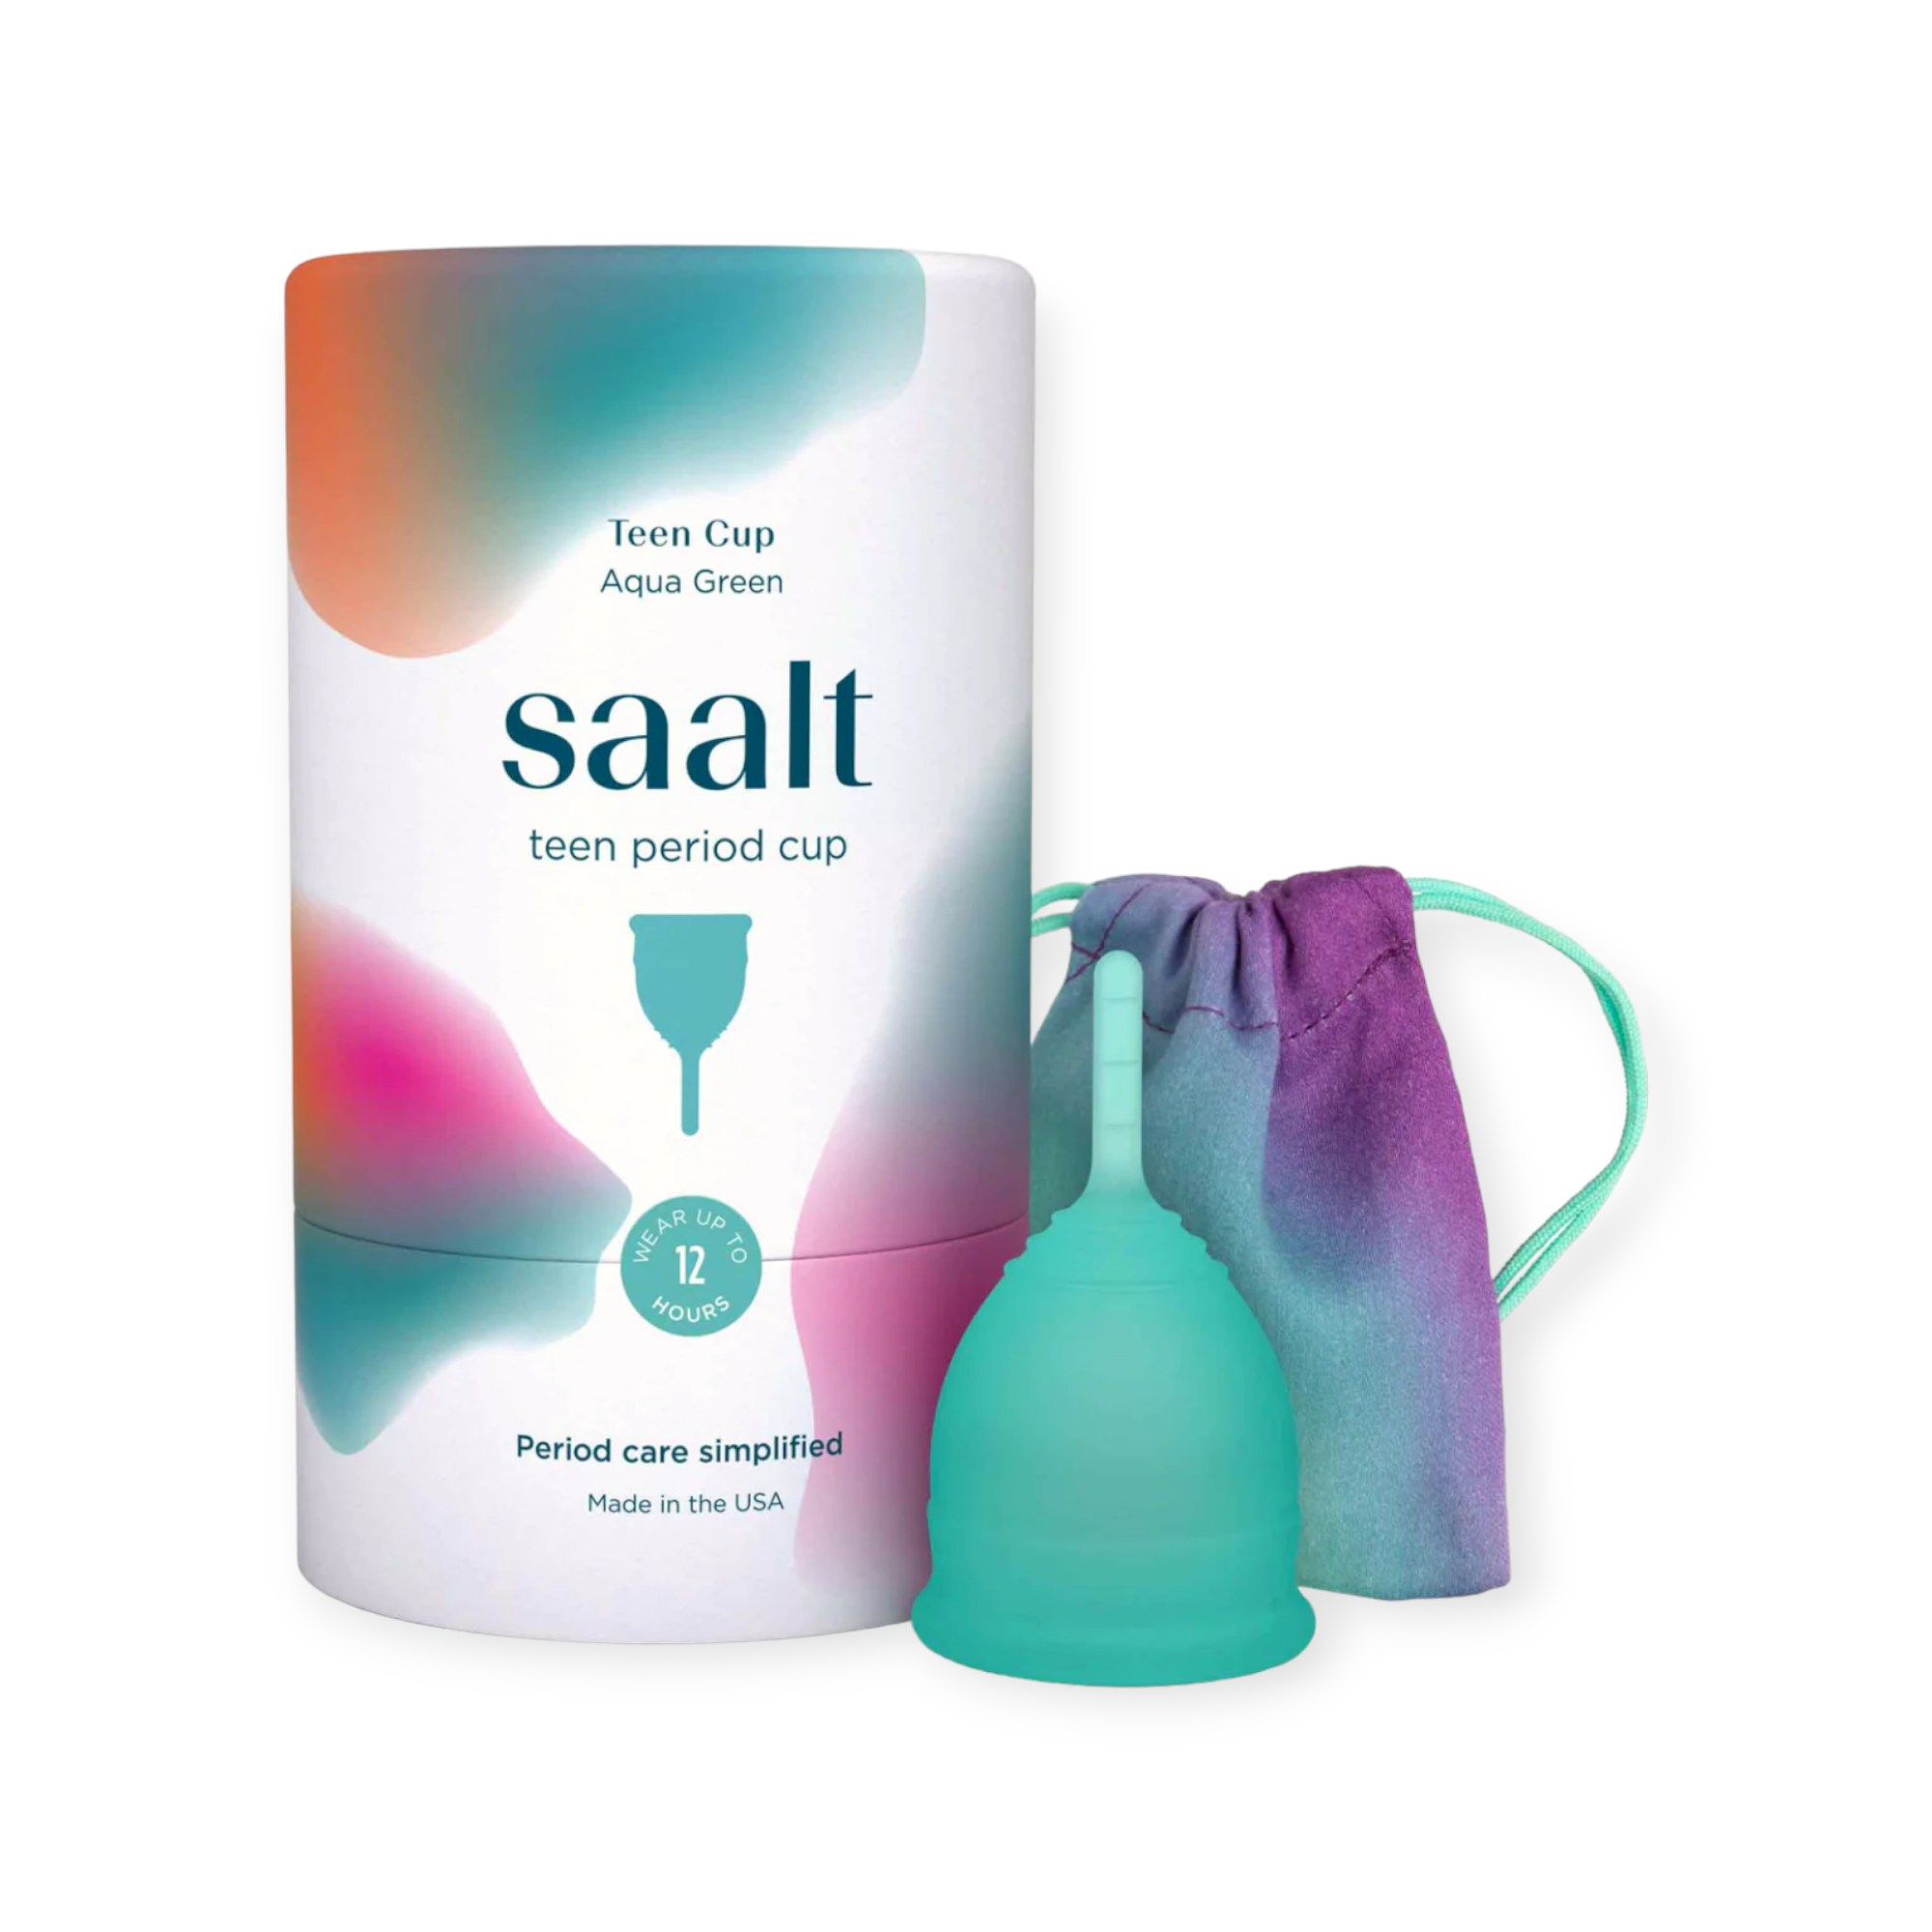 Saalt Duo Pack  Menstrual Cups